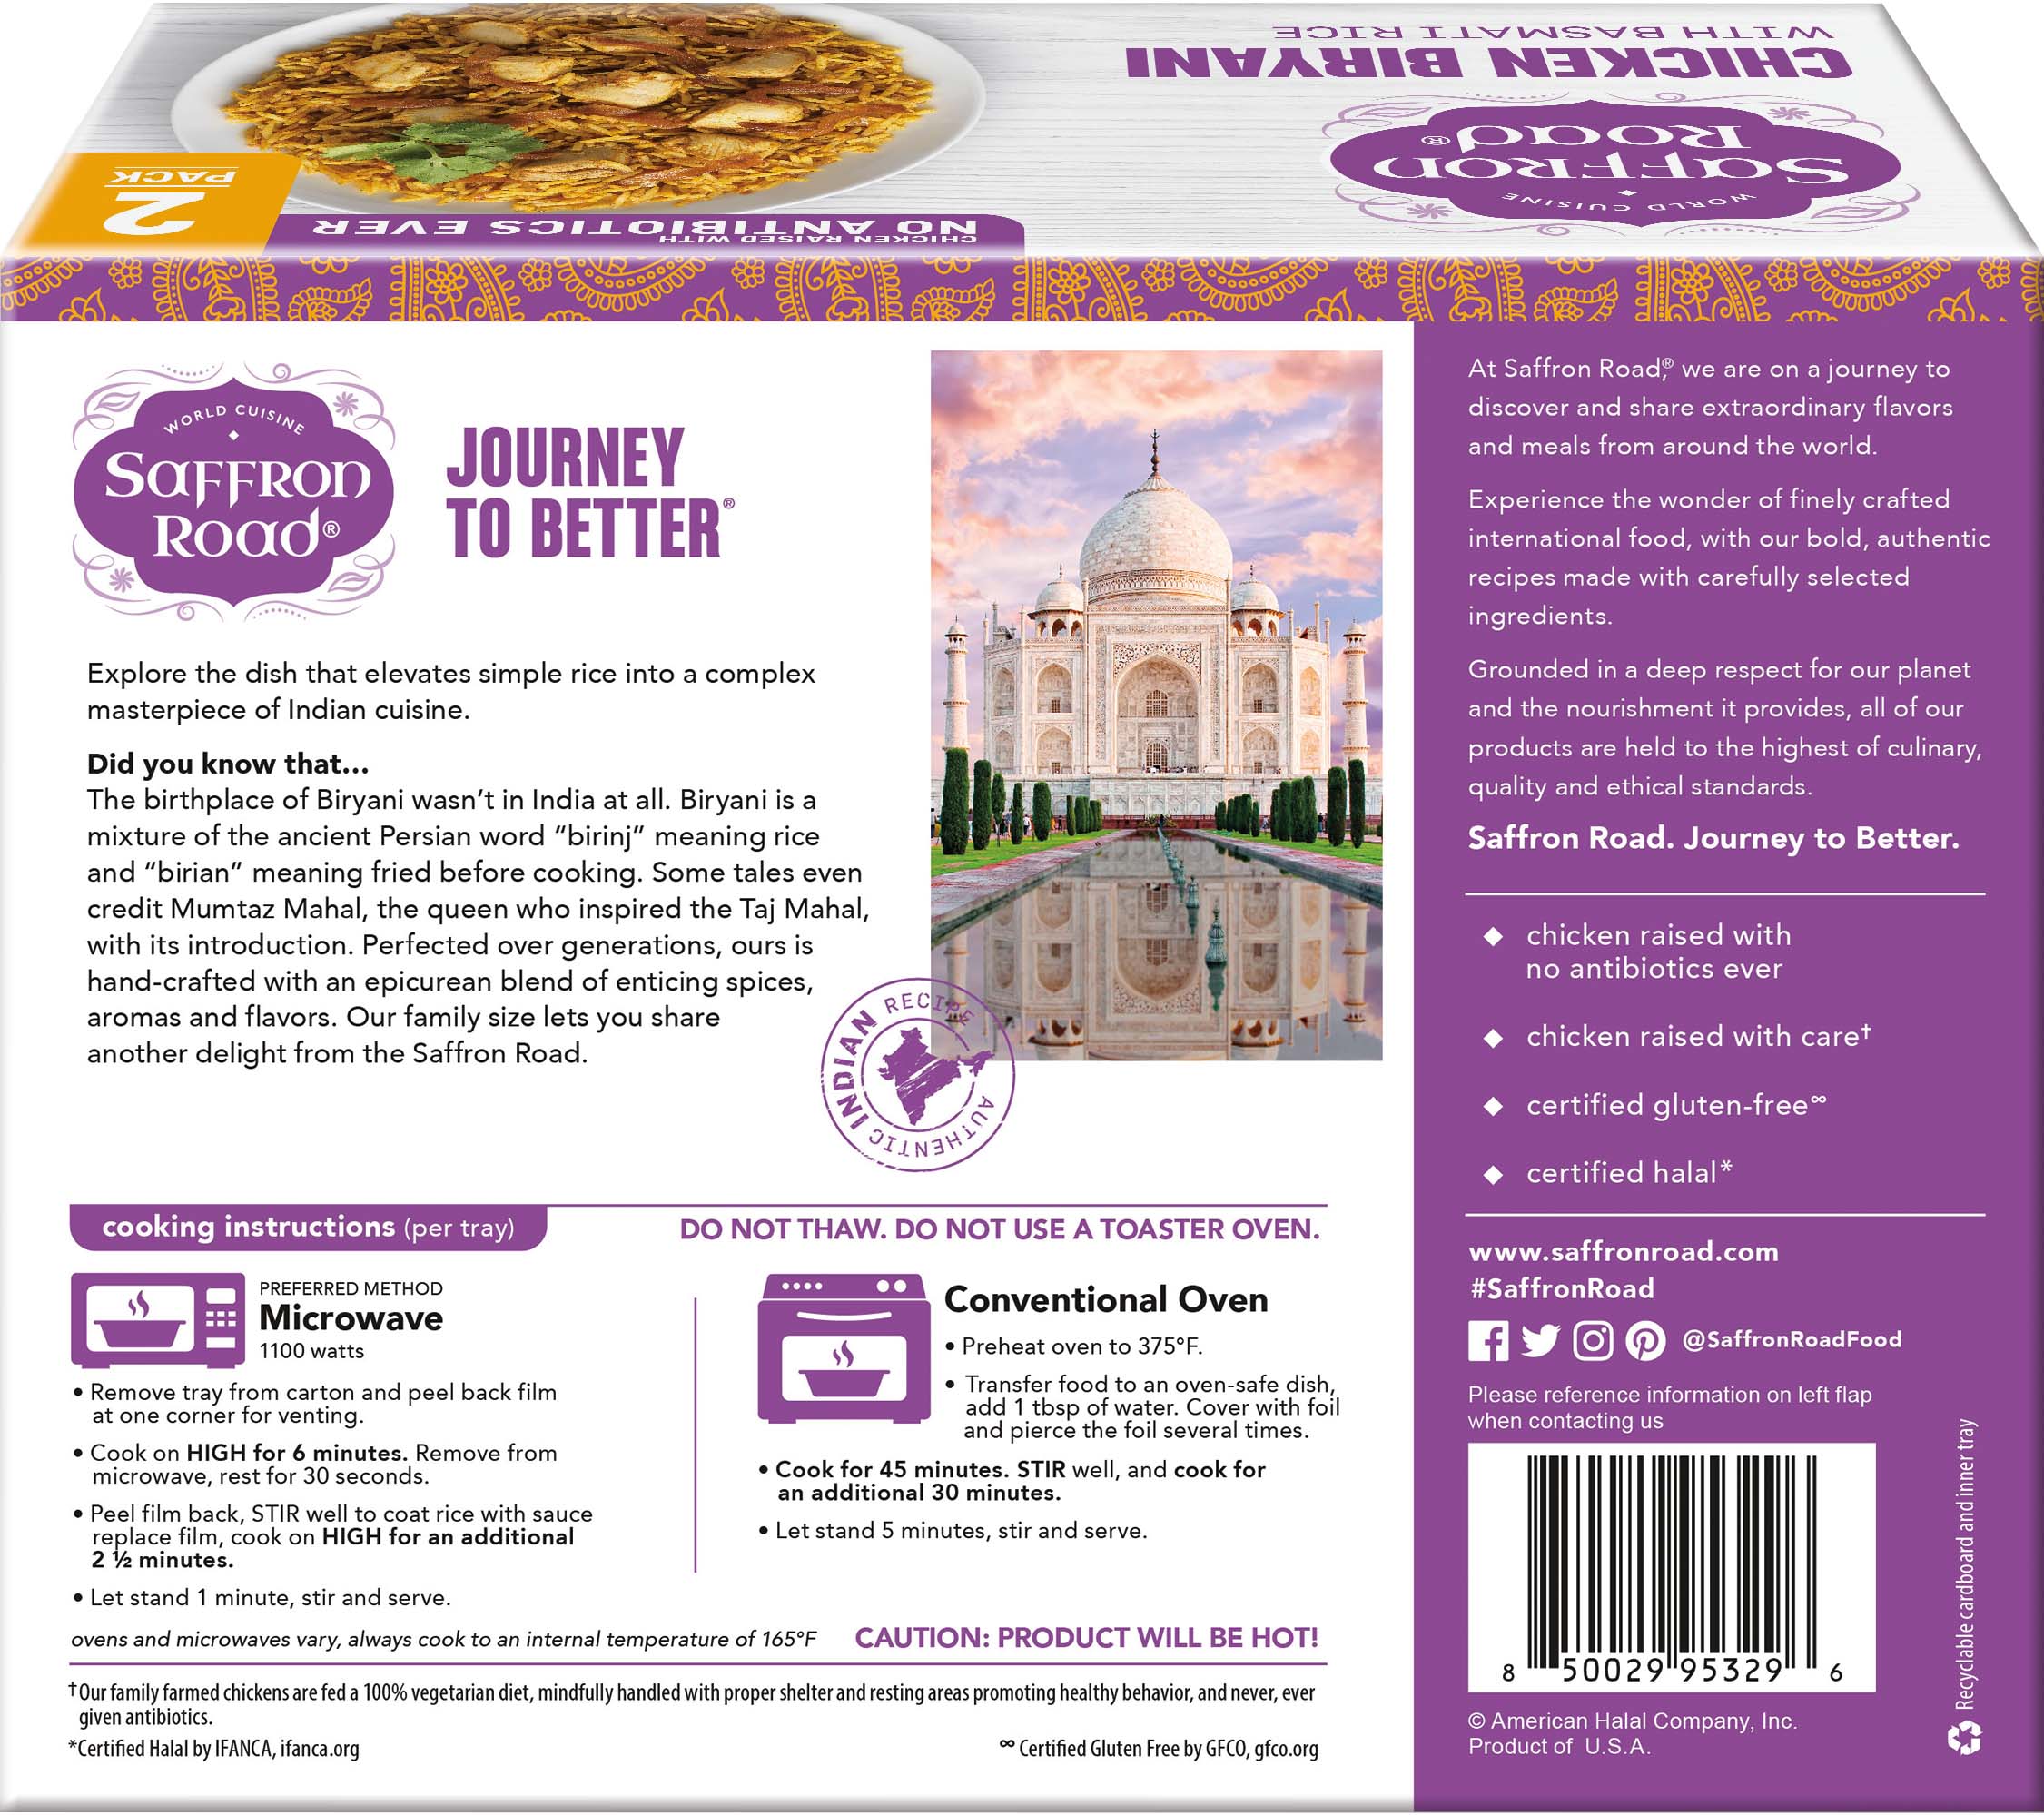 BJ's Chicken Biryani Frozen Meal 2 Pack Frozen Dinners saffron-road-b2c 